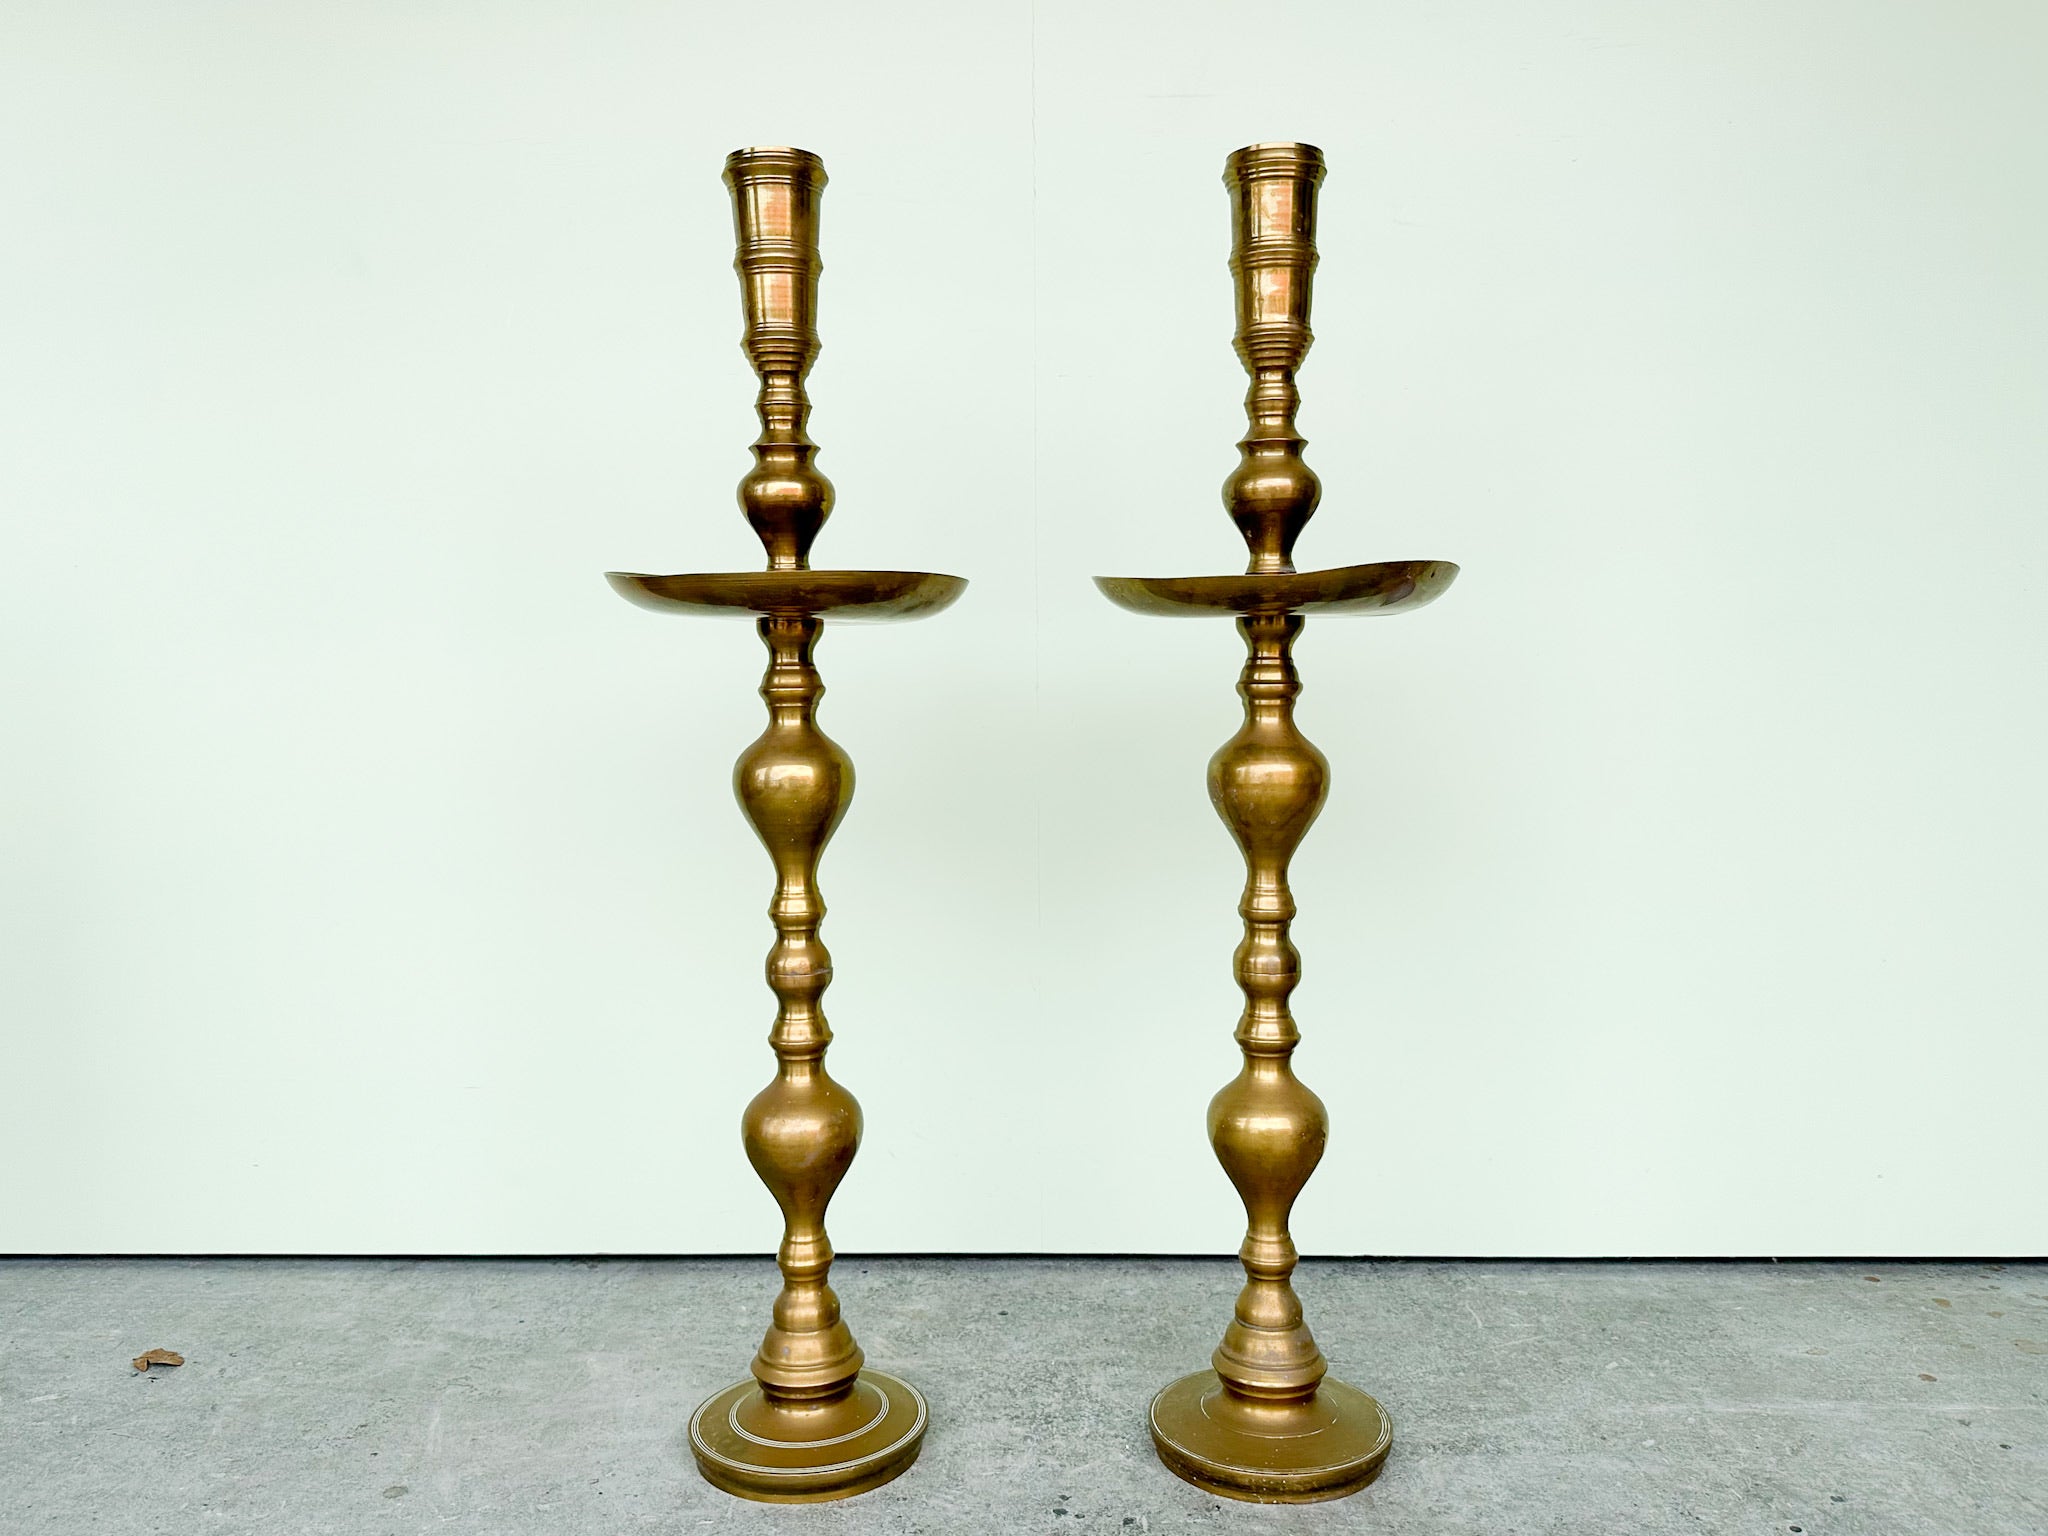 Italian renaissance style brass candlesticks